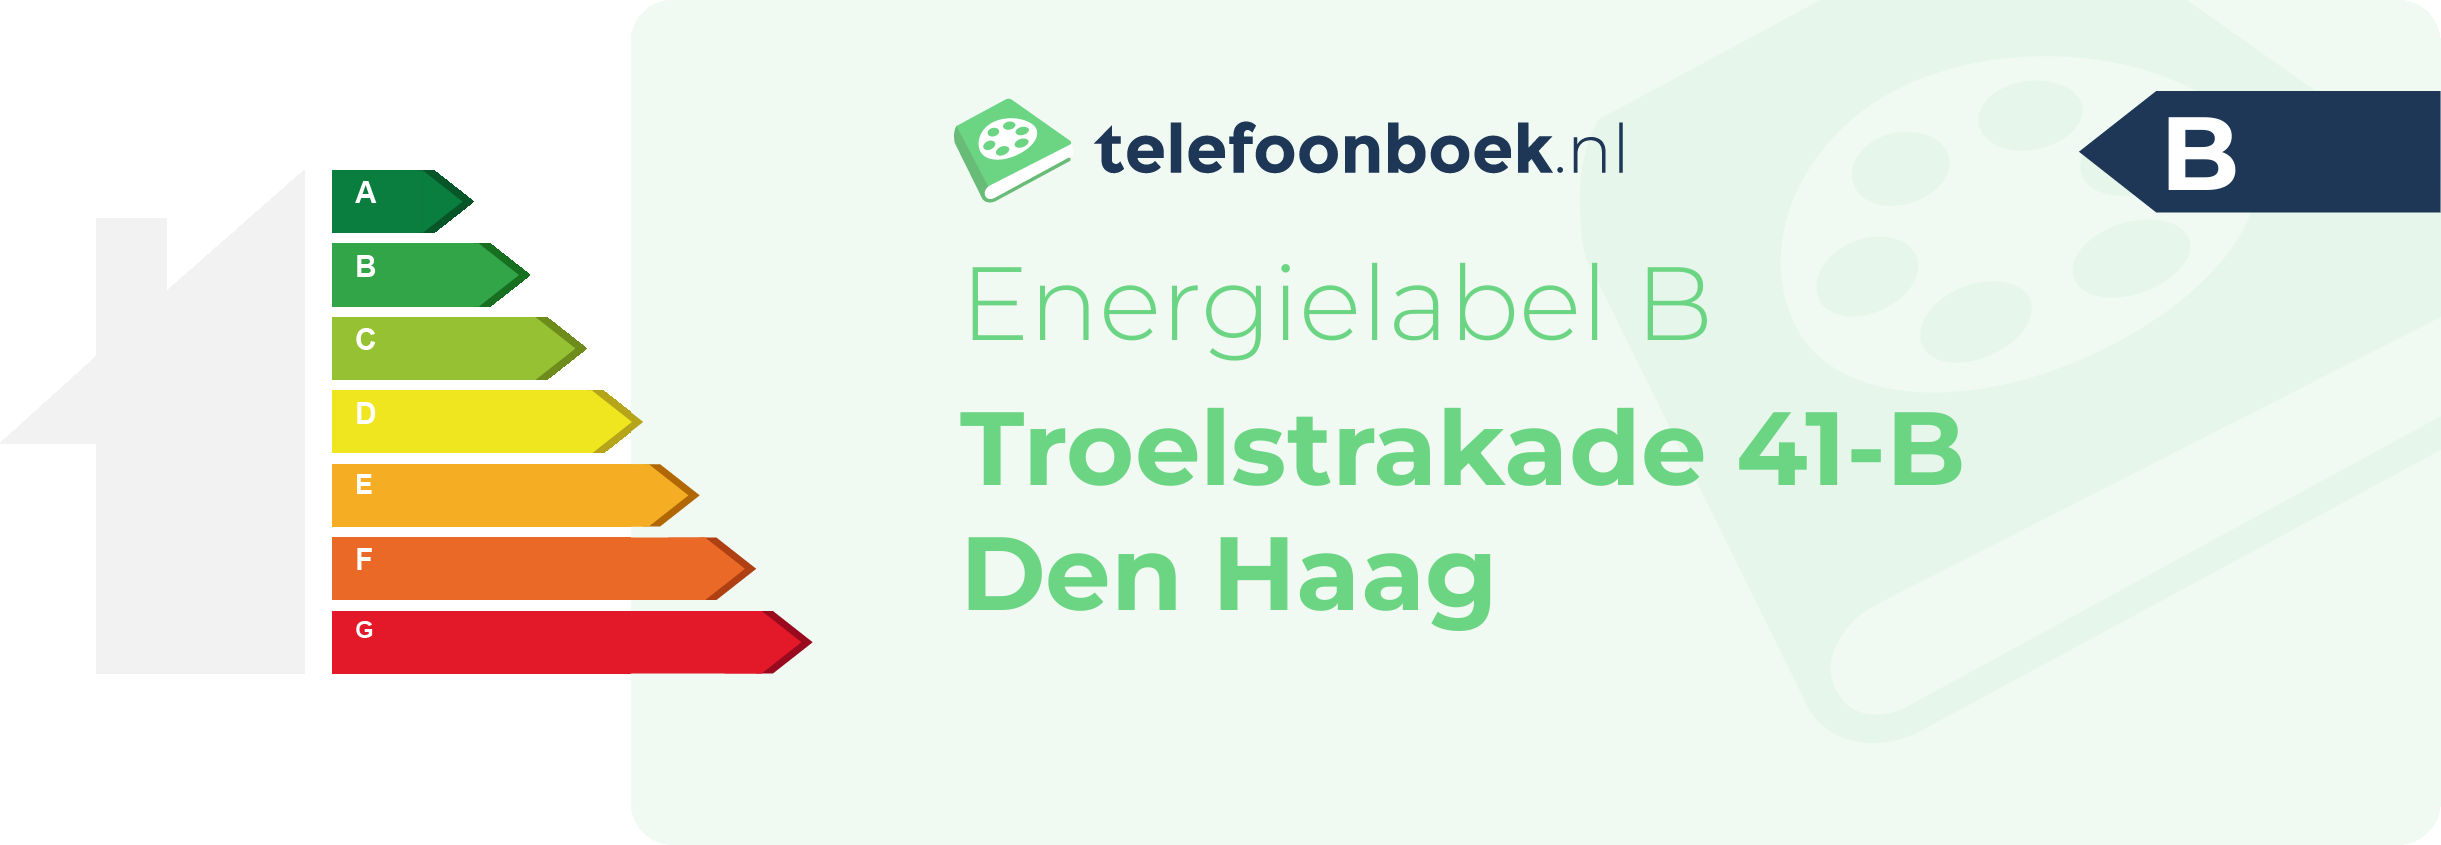 Energielabel Troelstrakade 41-B Den Haag